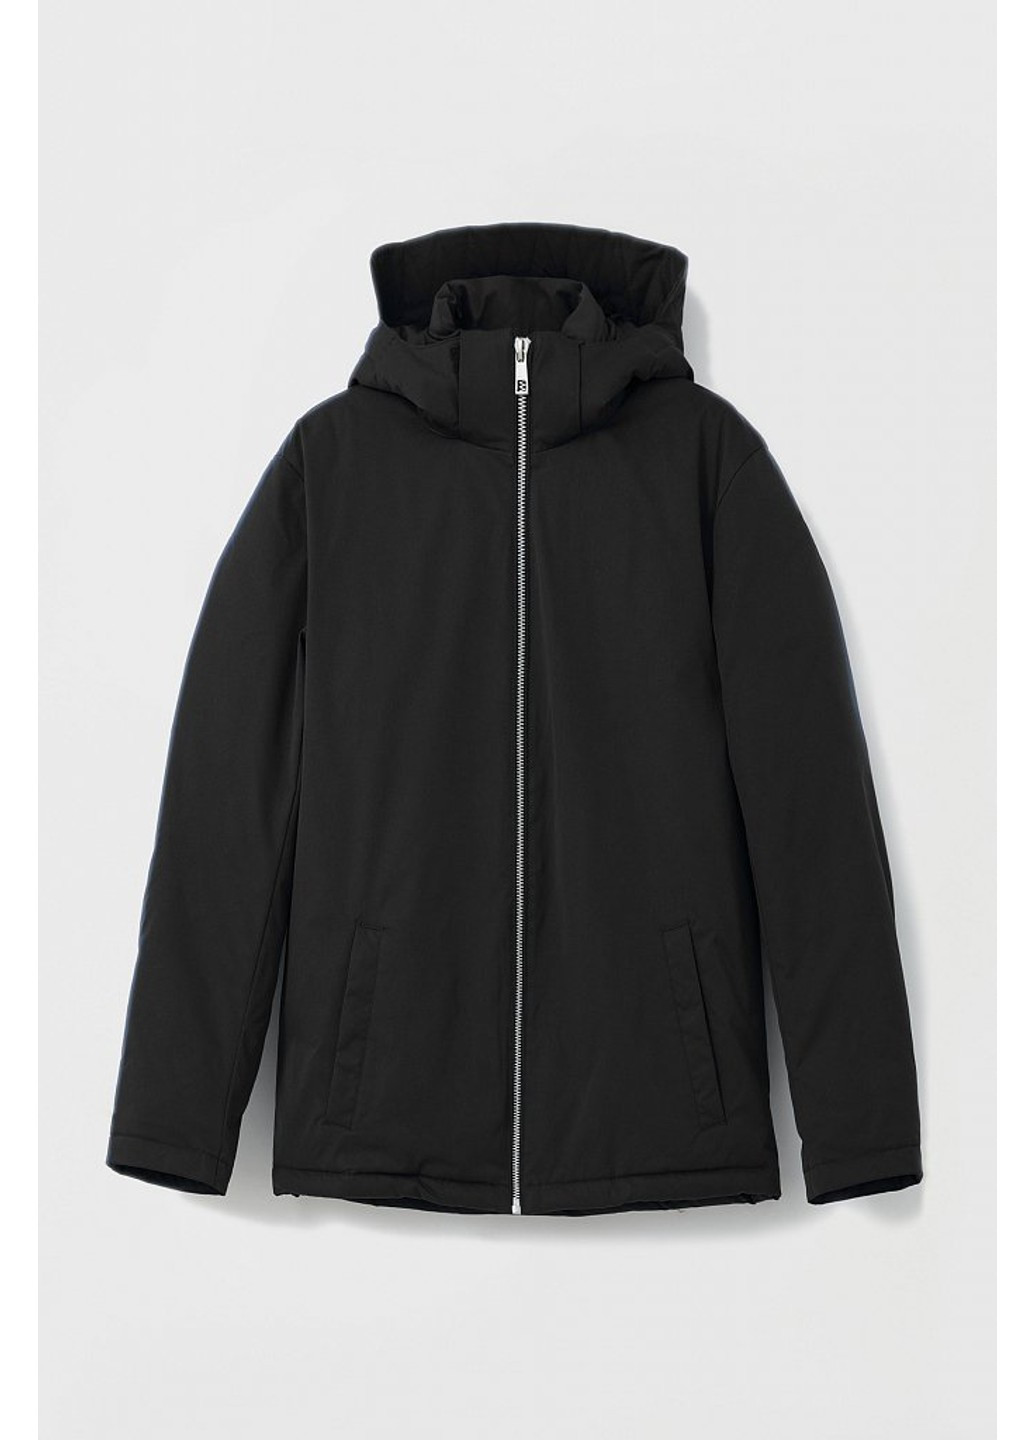 Черная зимняя зимняя куртка fab21006-200 Finn Flare